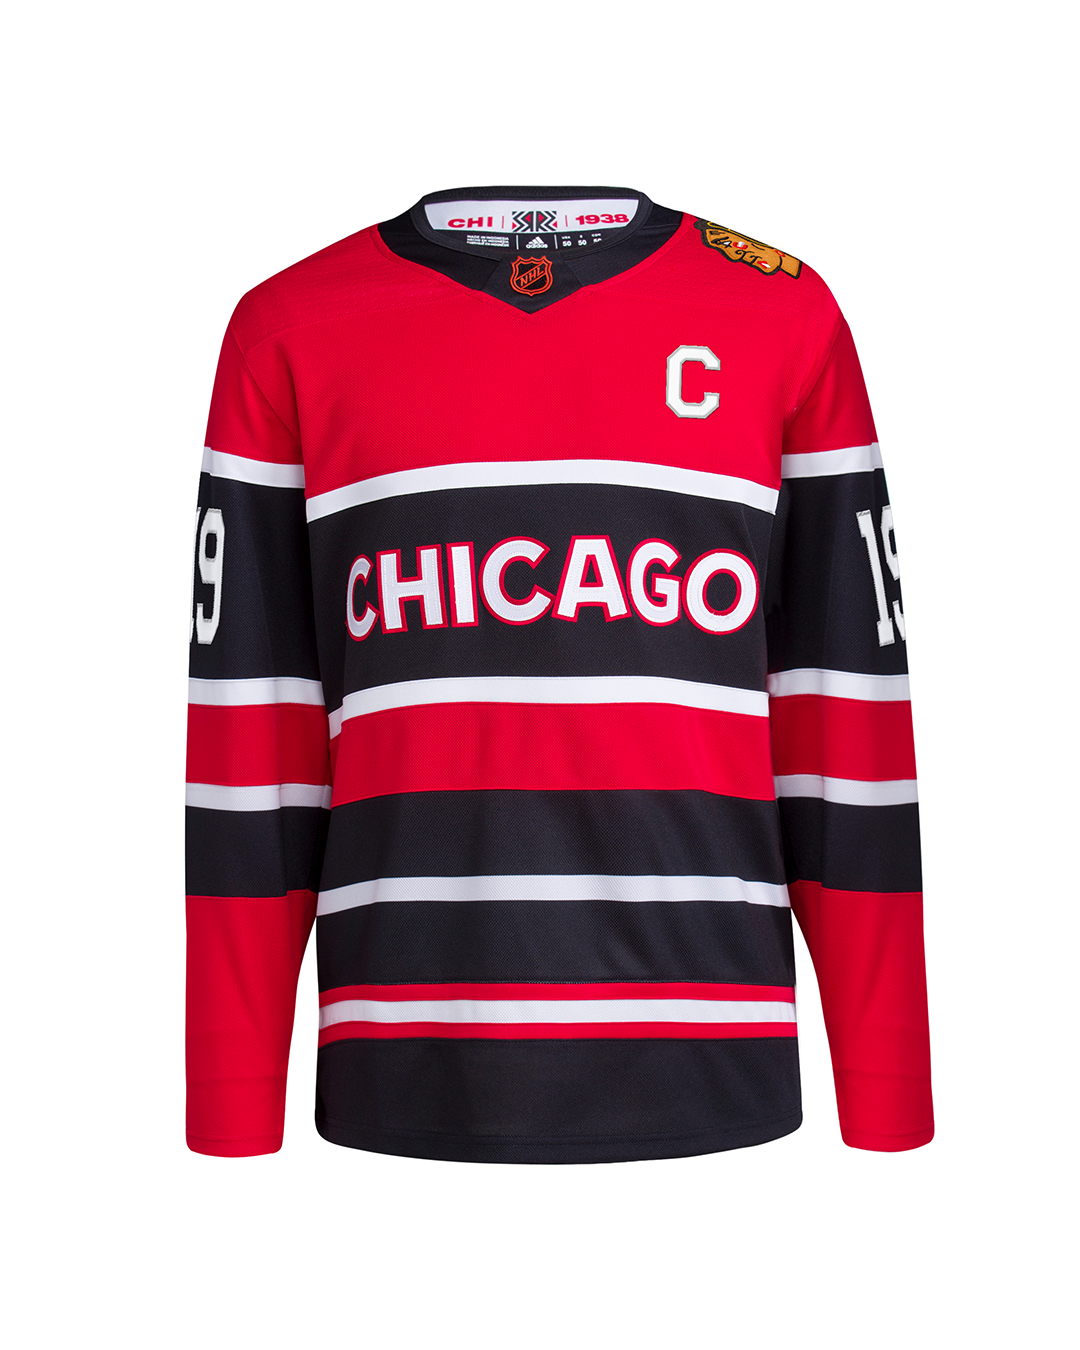 Chicago Blackhawks Winter Classic Adidas Hockey Jersey Men's Size 50